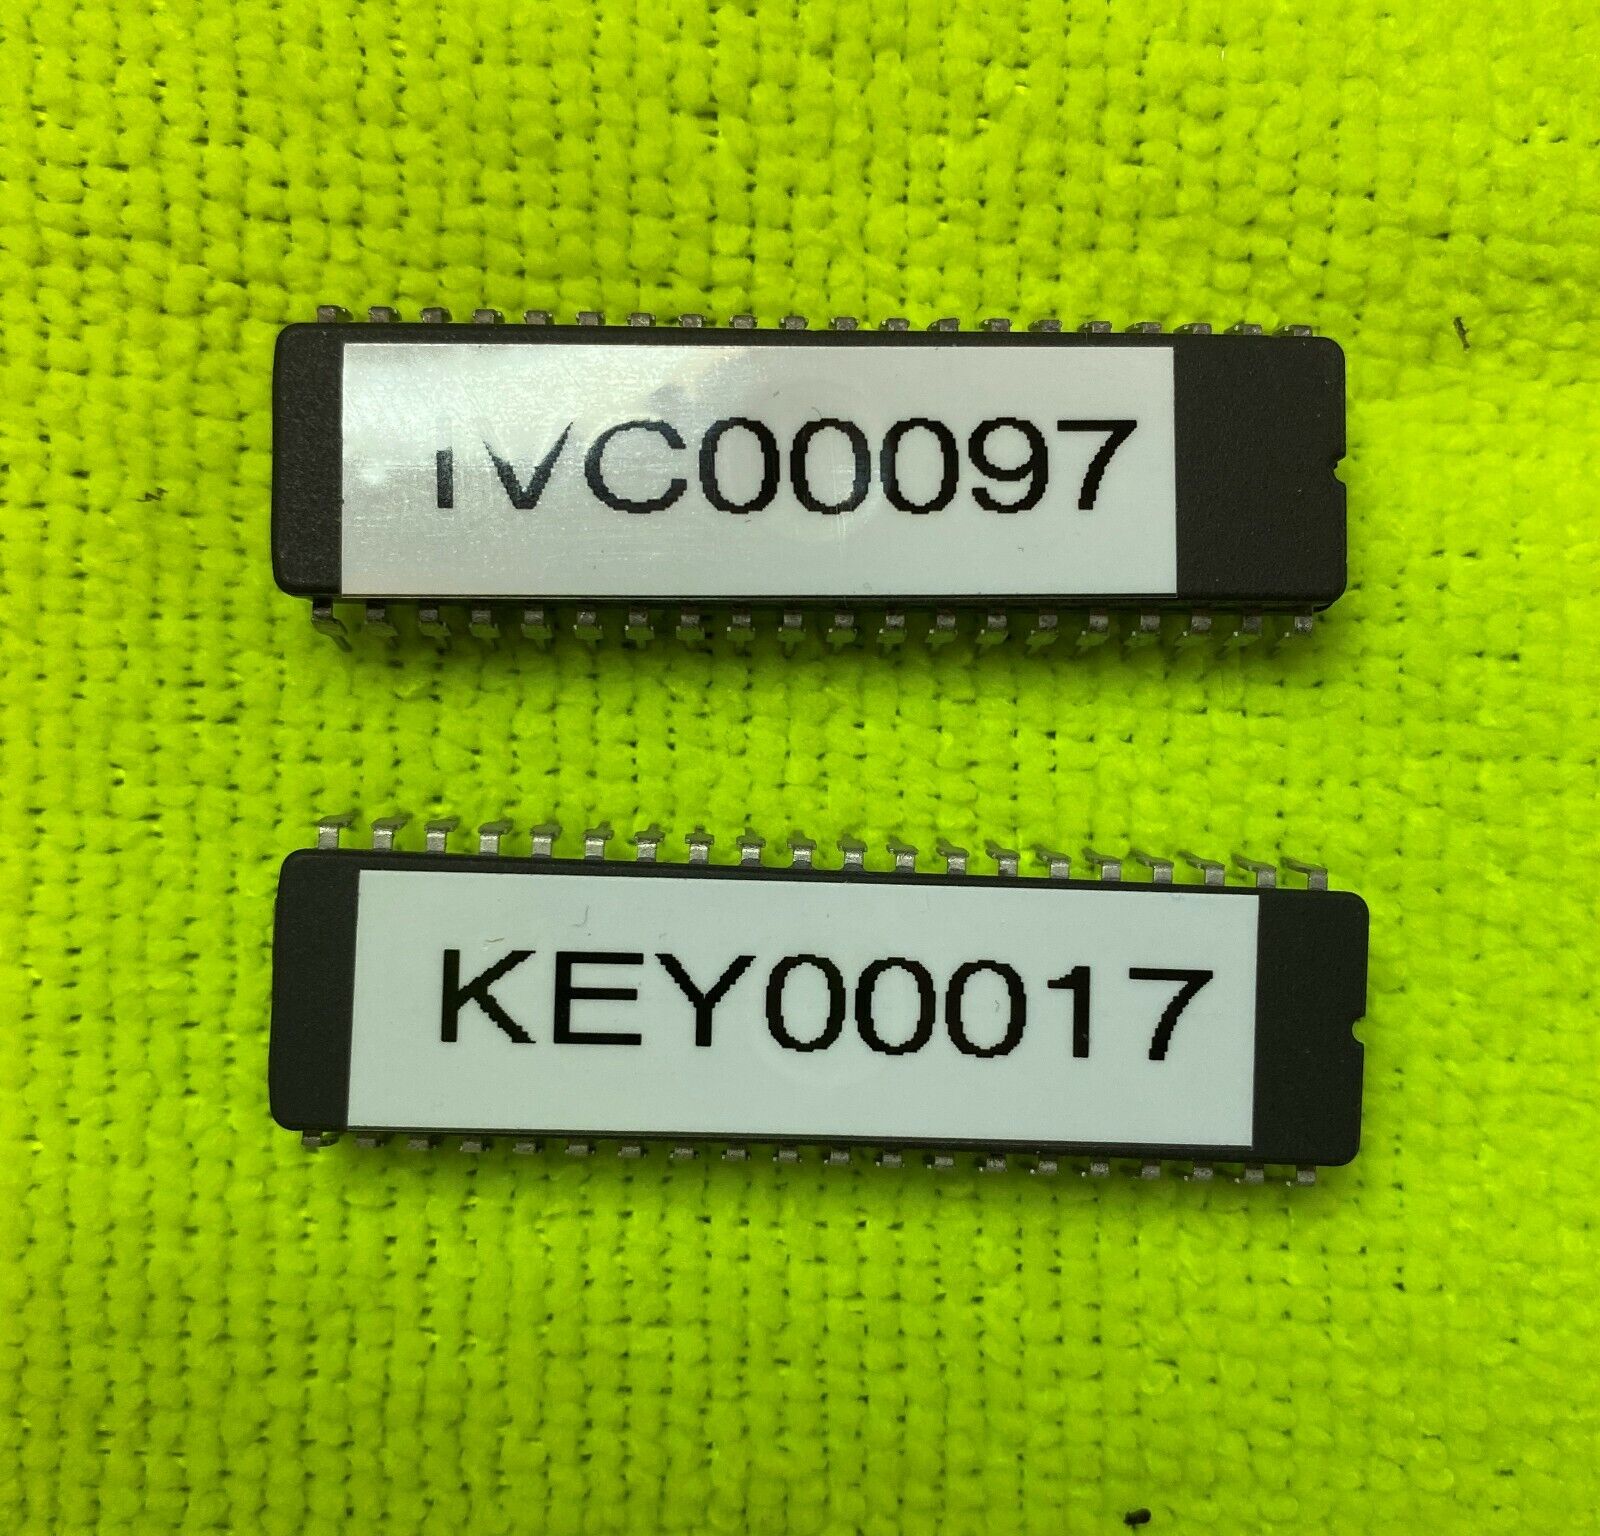 IGT S2000 Clear & Key EPROM Chip Set (IVC00097 & KEY00017) 